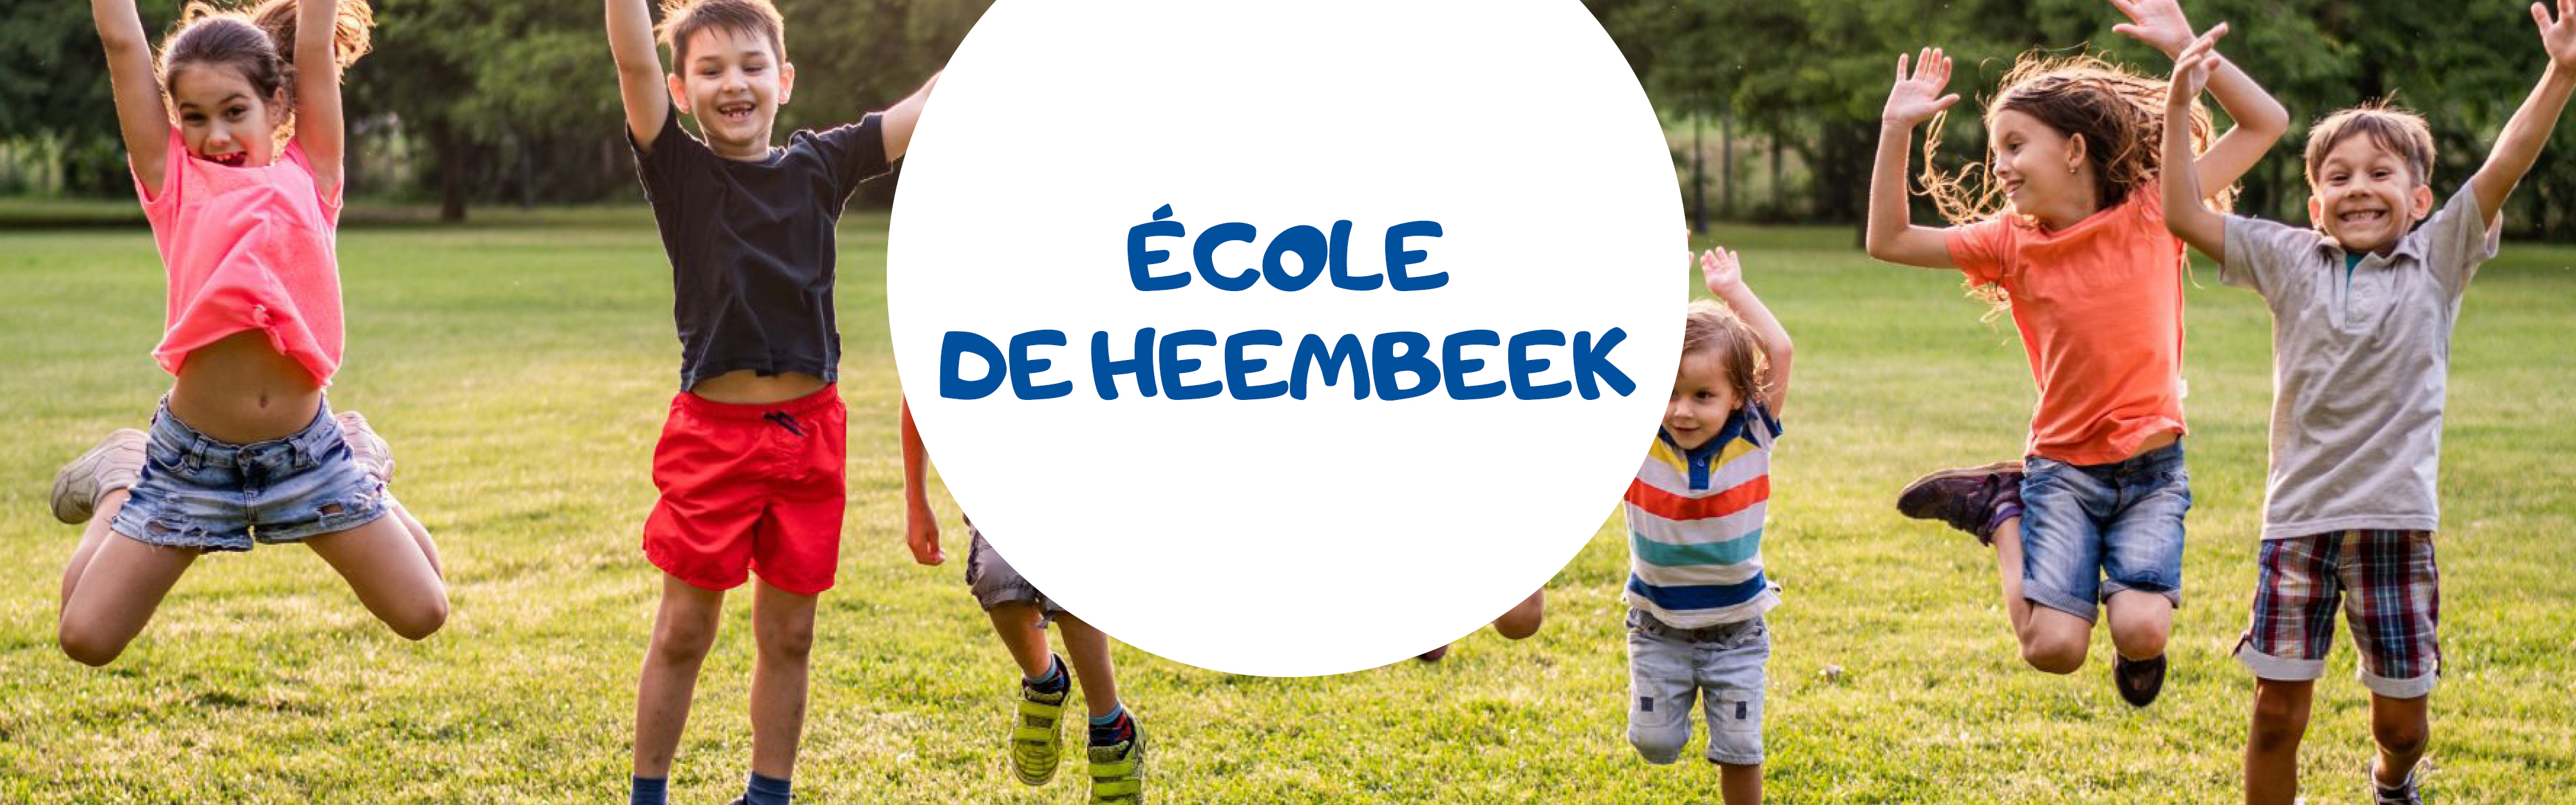 Neder-Over-Heembeek - Ecole Maternelle de Heembeek